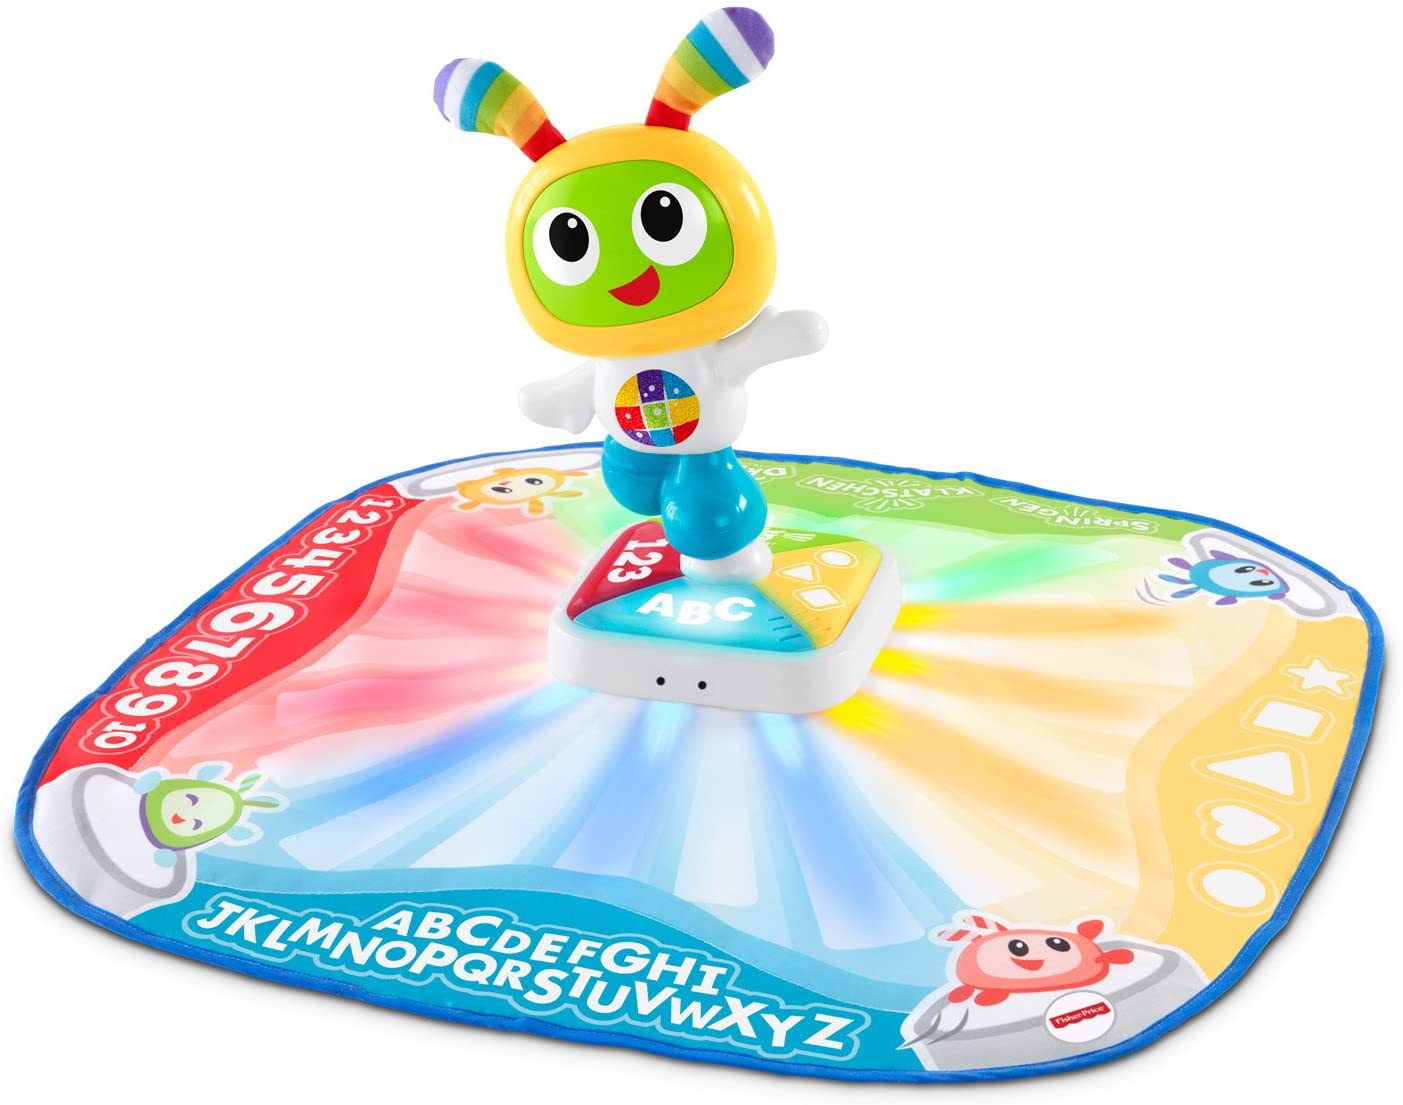 Fisher-Price Baby Toy, Dance fun BeatBo Play mat